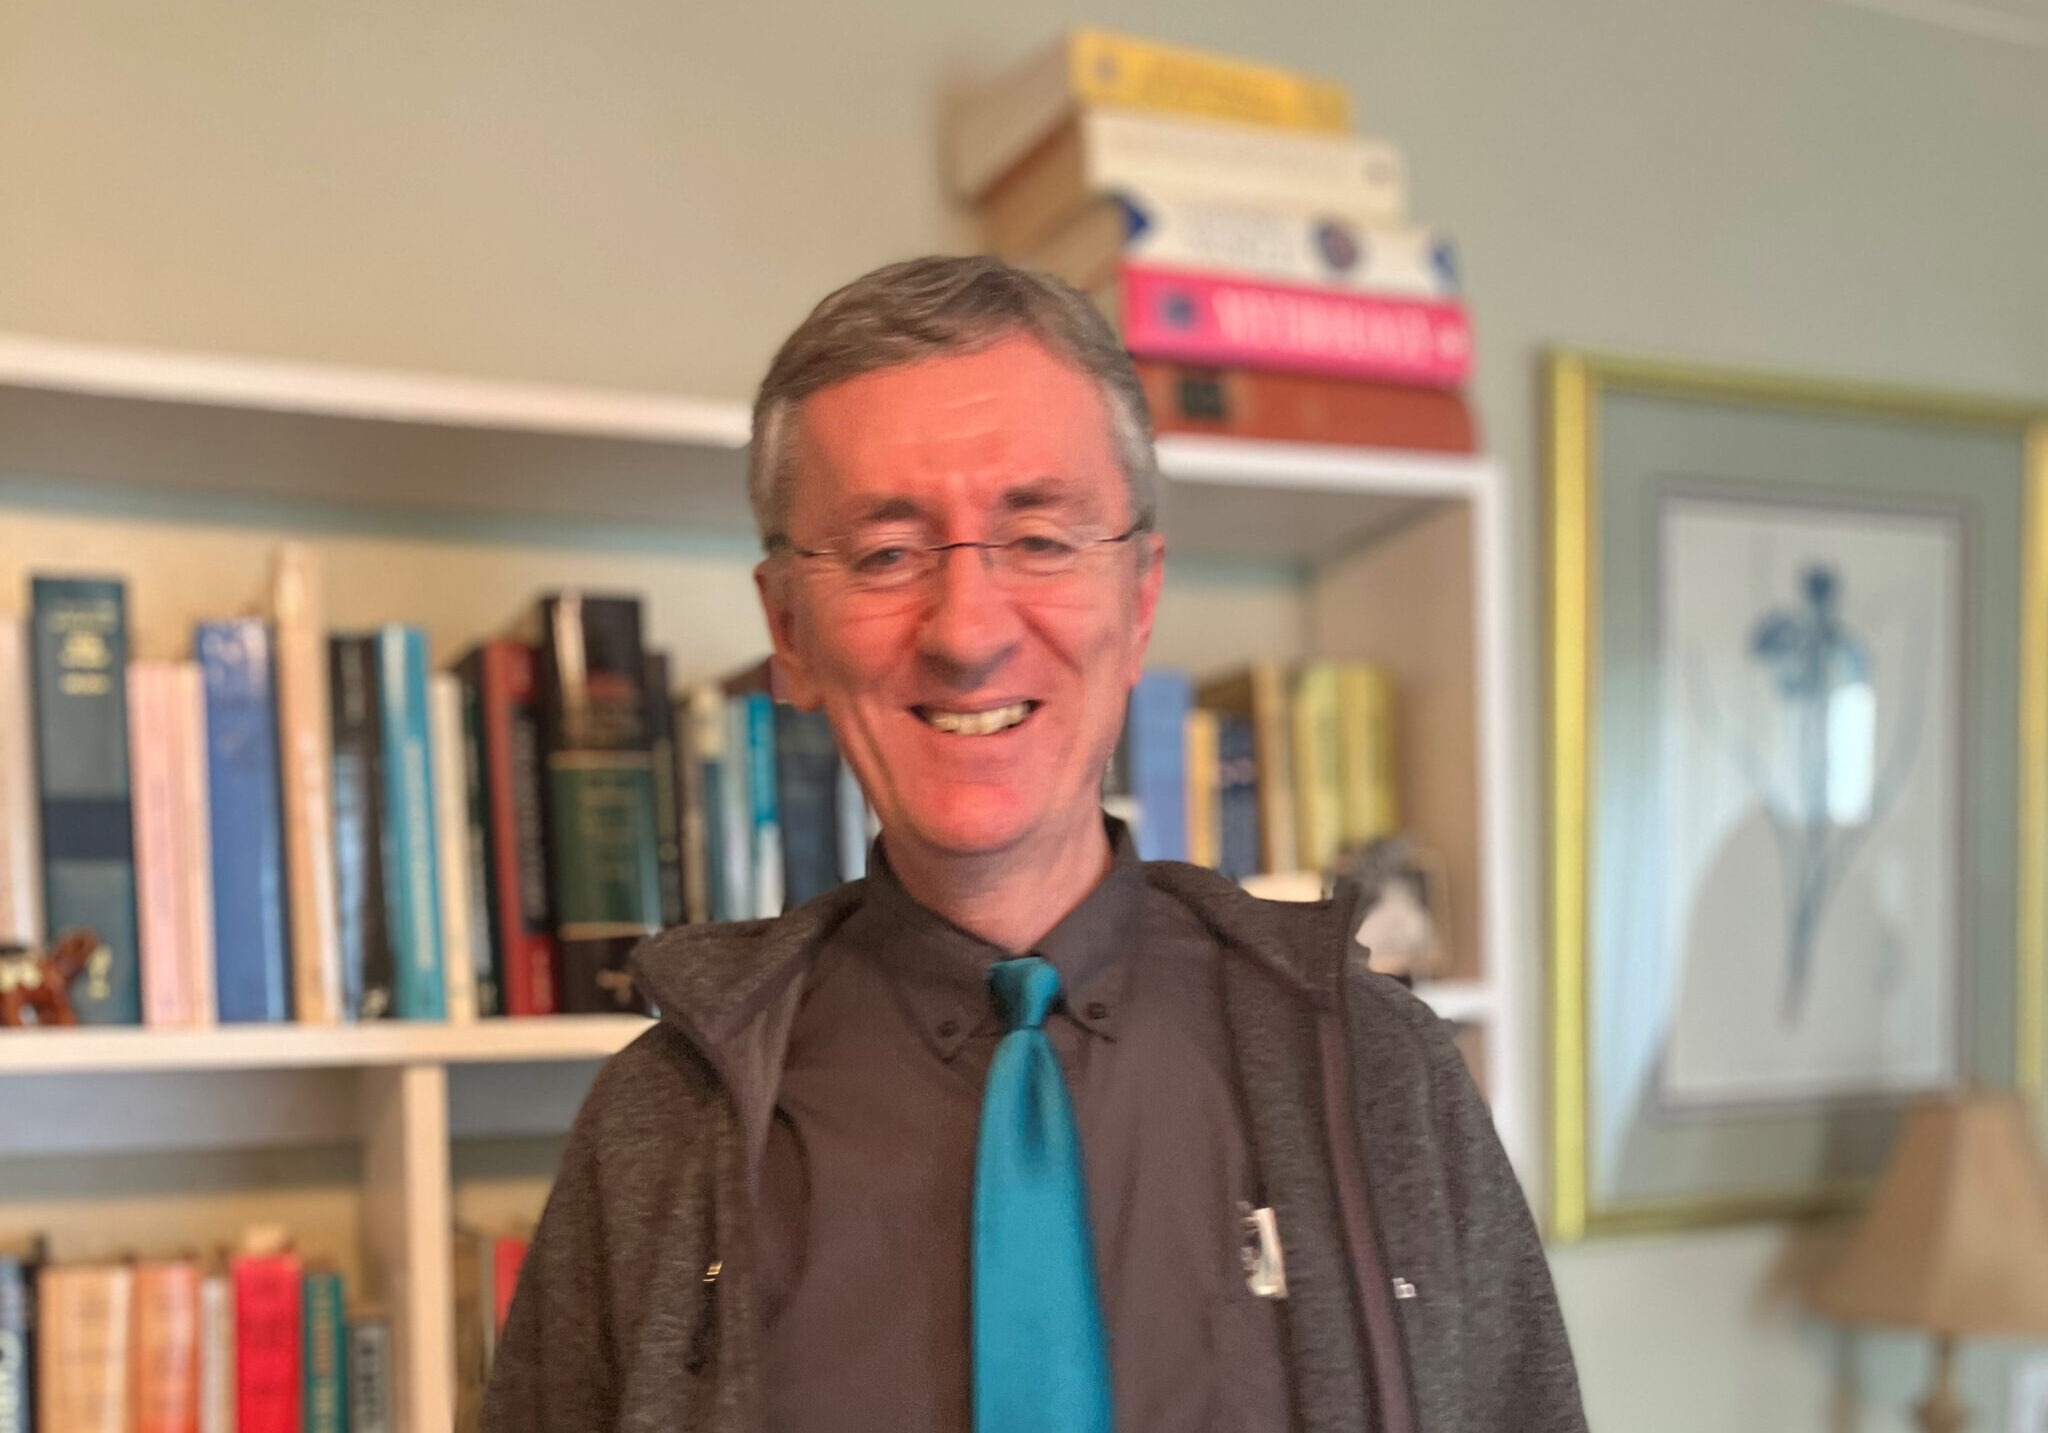 Man wearing teal tie standing in front of a bookshelf